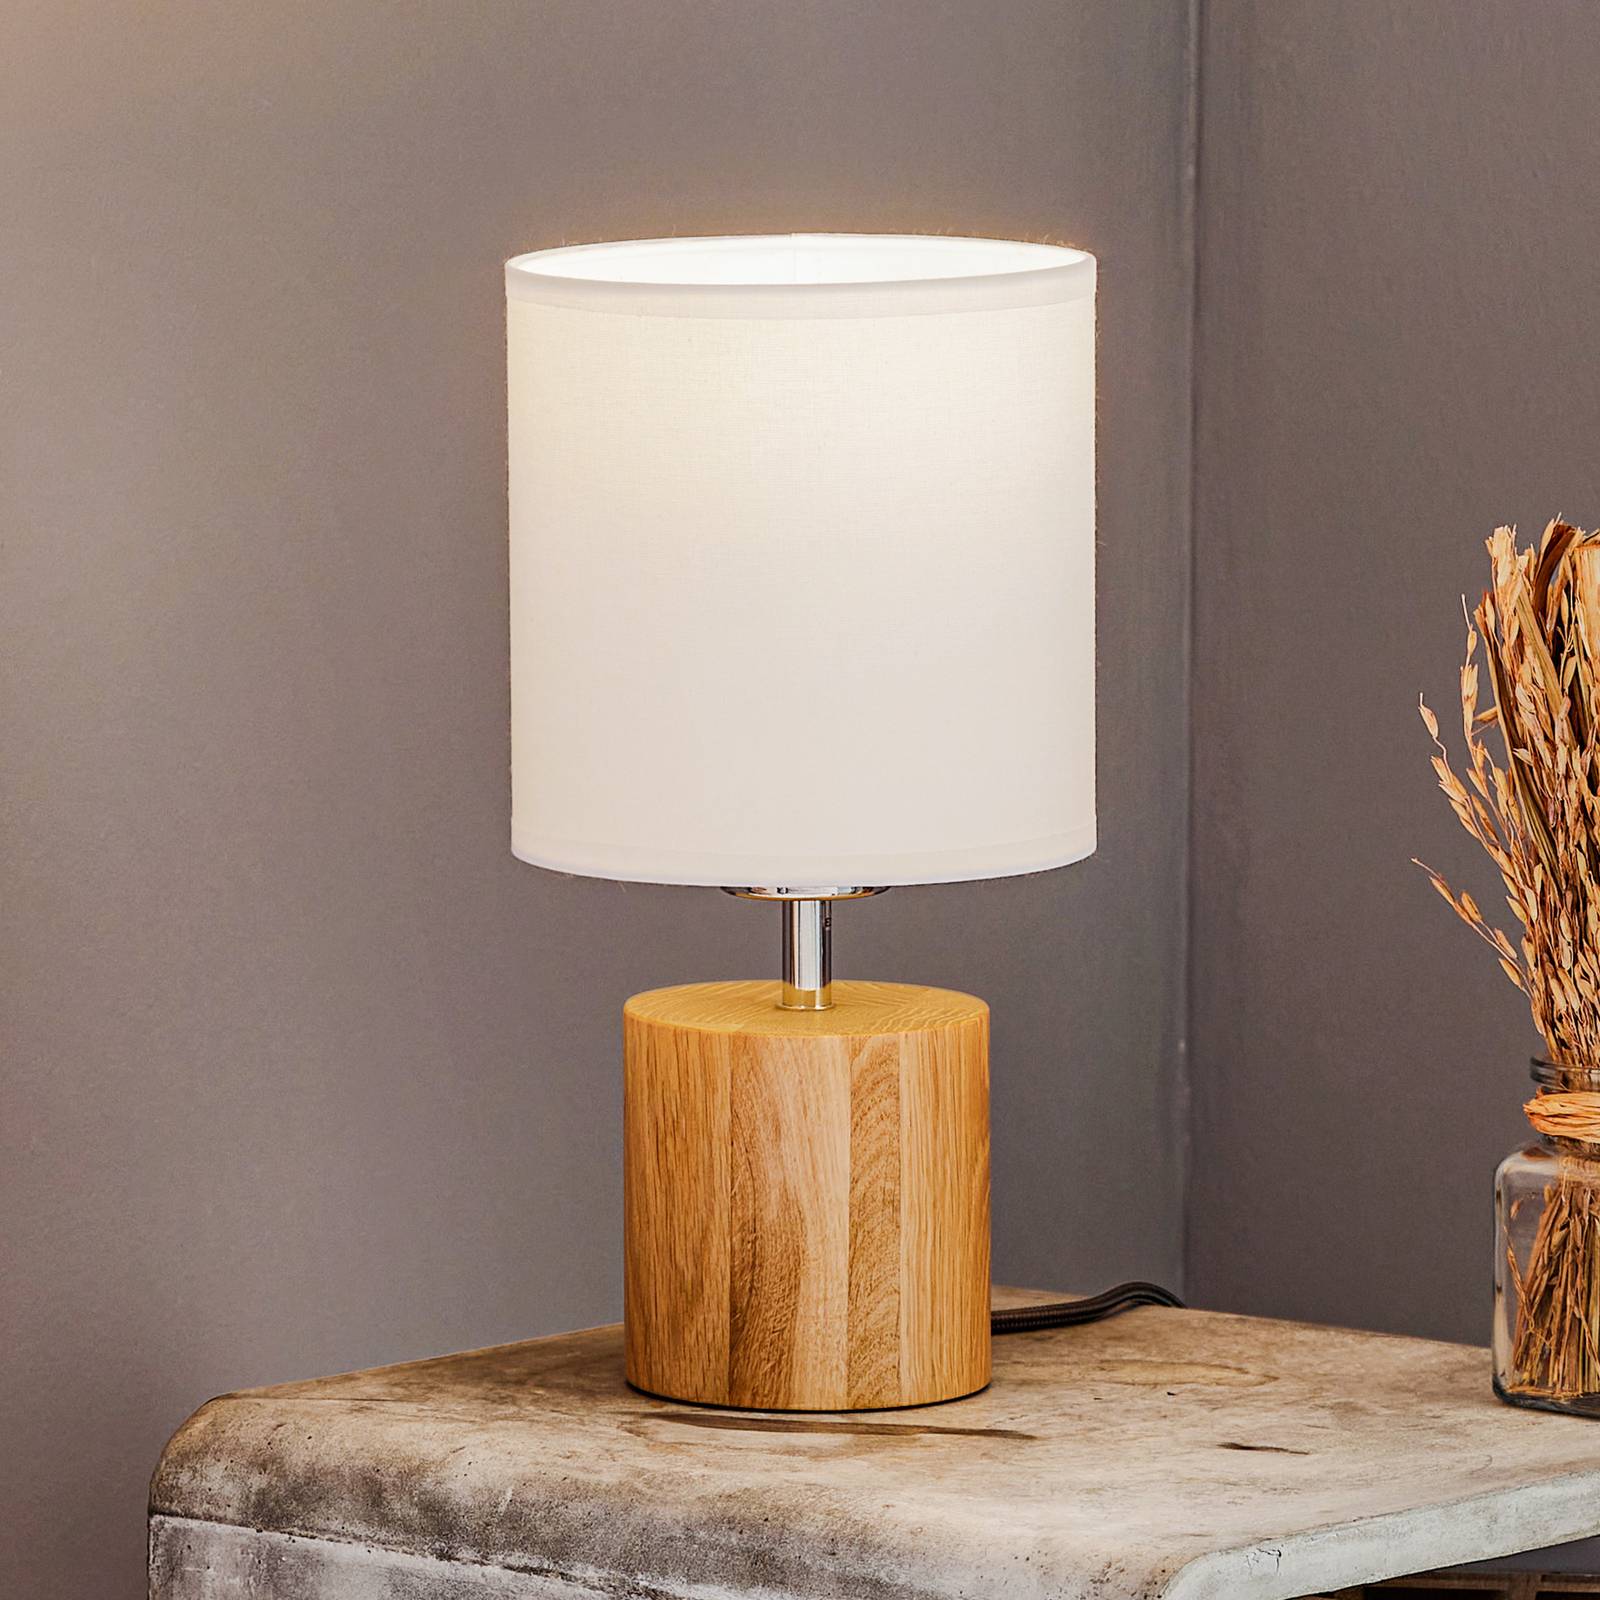 spot-light lampe à poser trongo chêne huilé abat-jour blanc